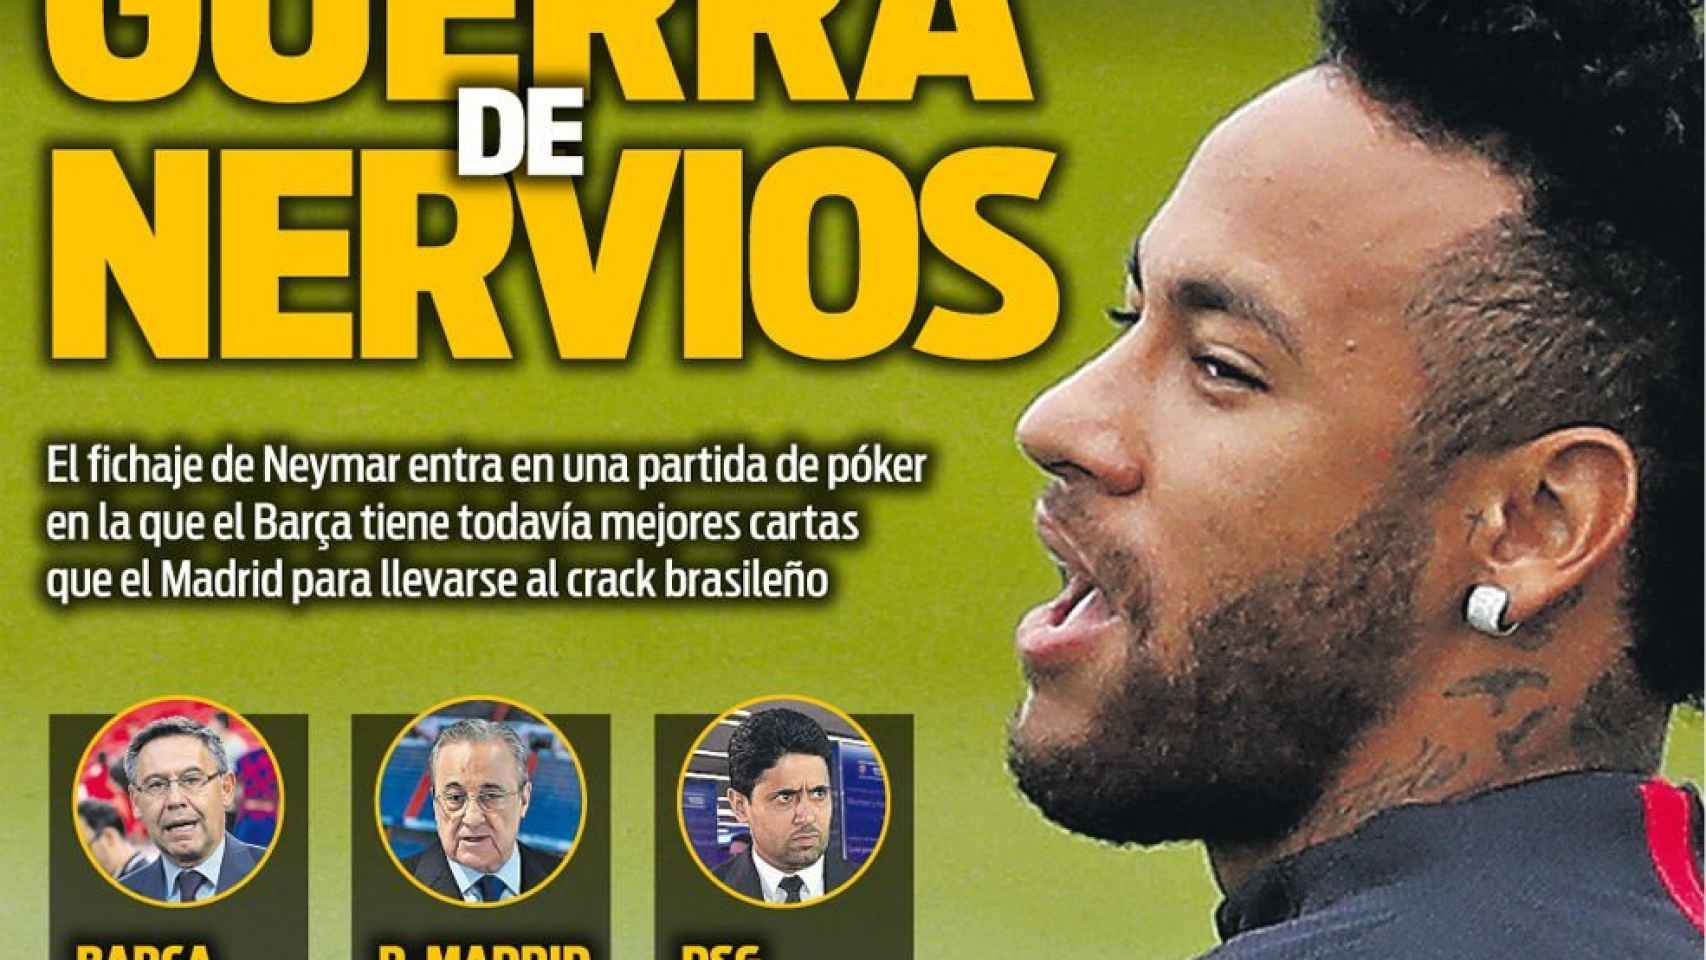 La portada del diario Sport (18/08/2019)